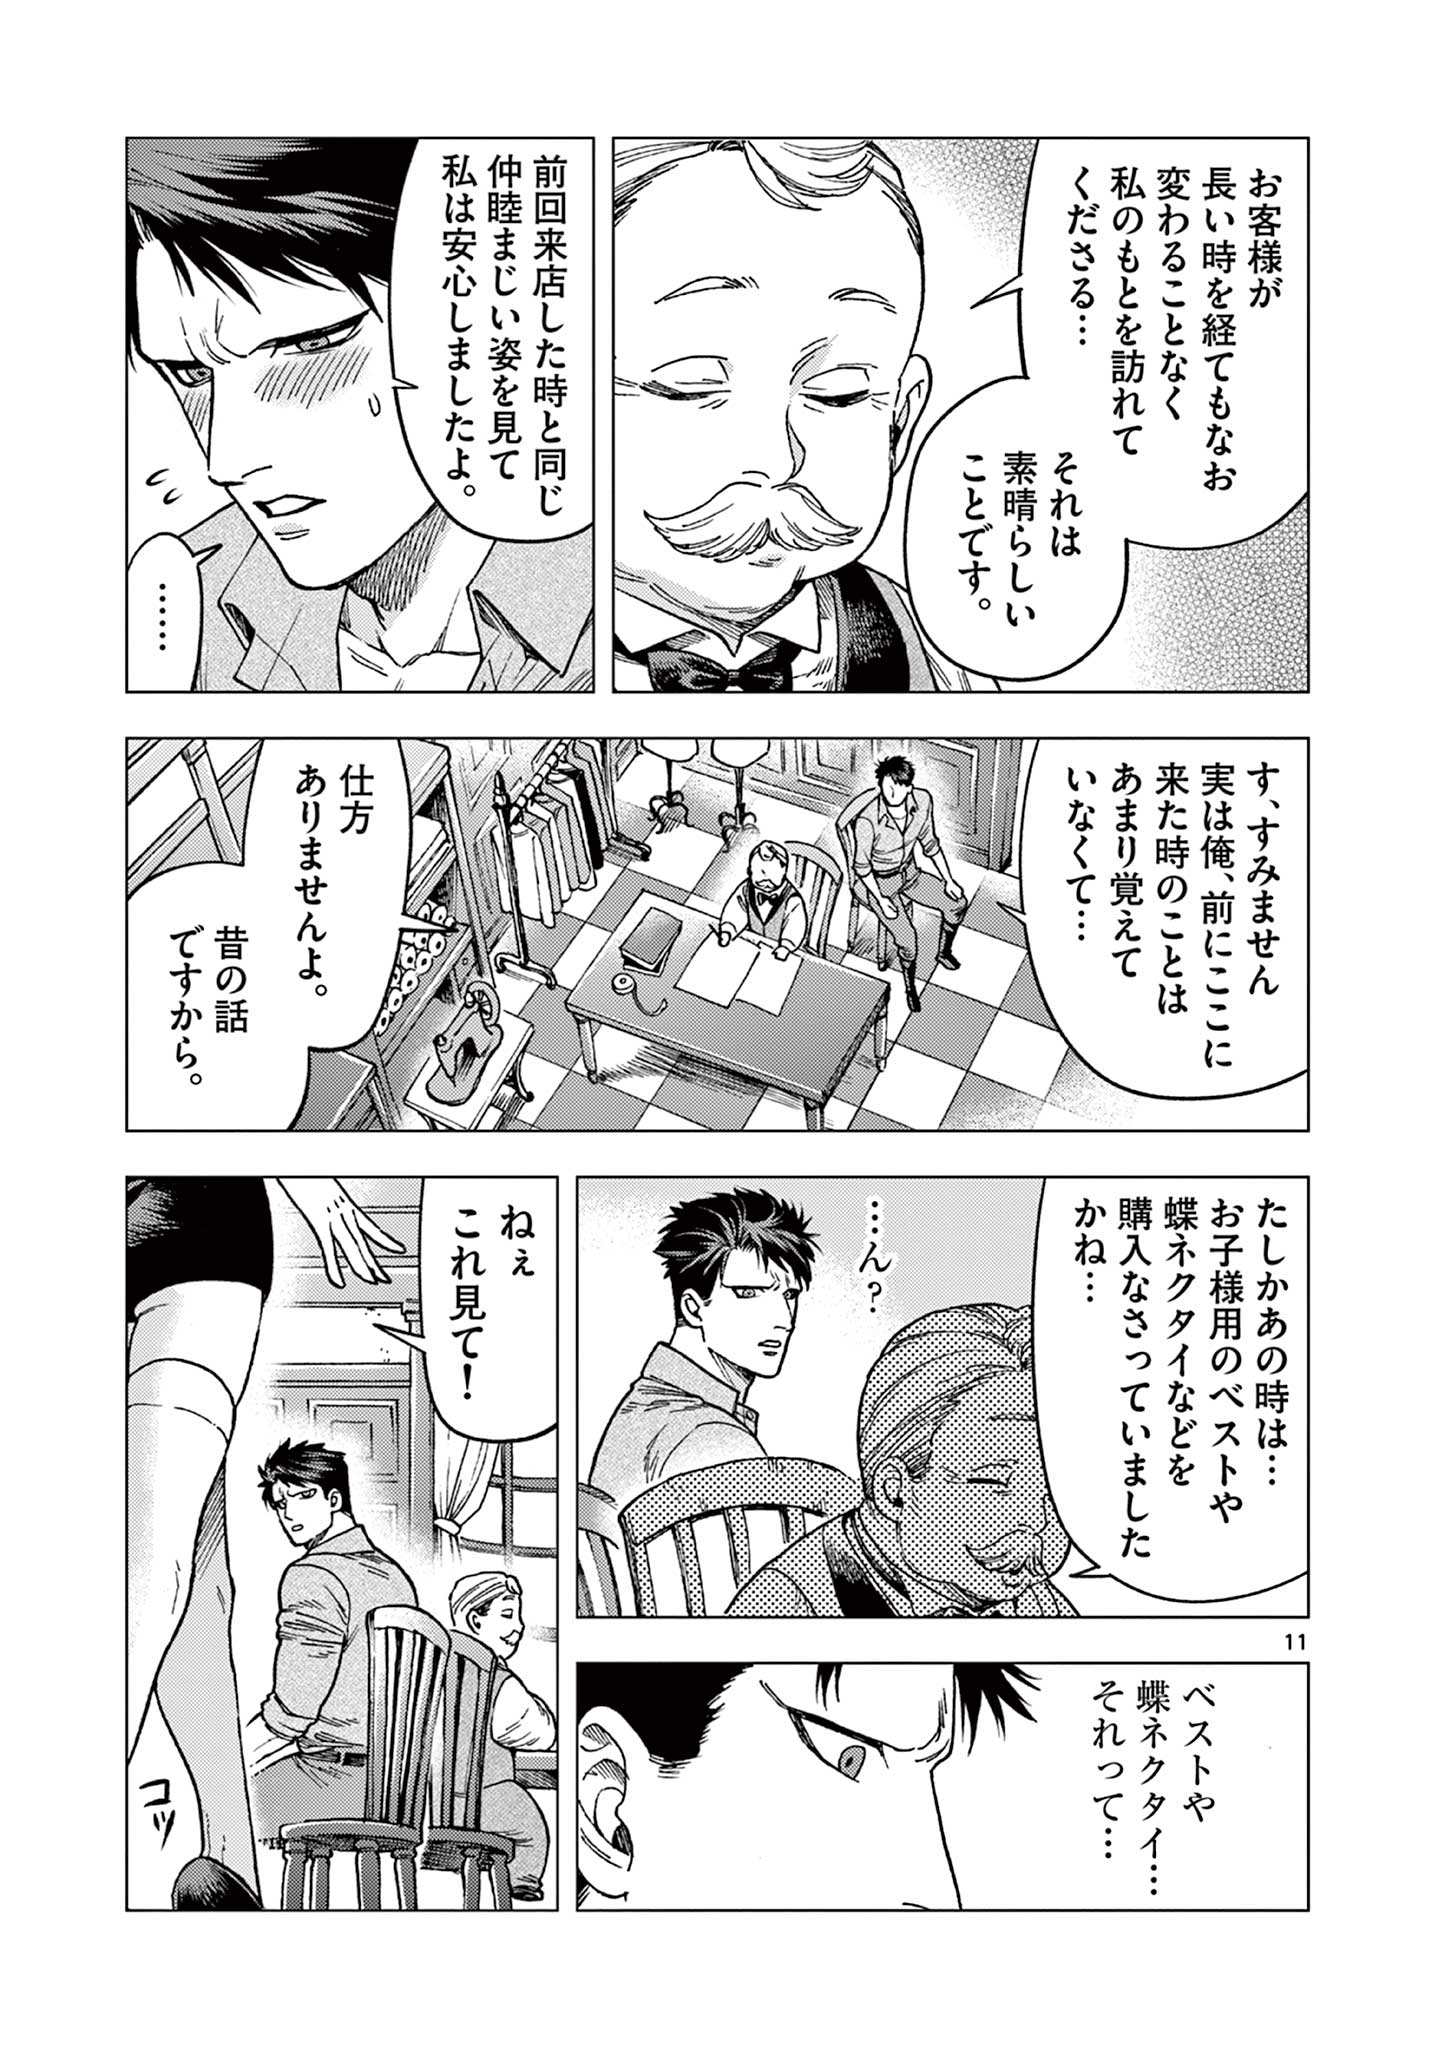 Raul to Kyuuketsuki - Chapter 3 - Page 11